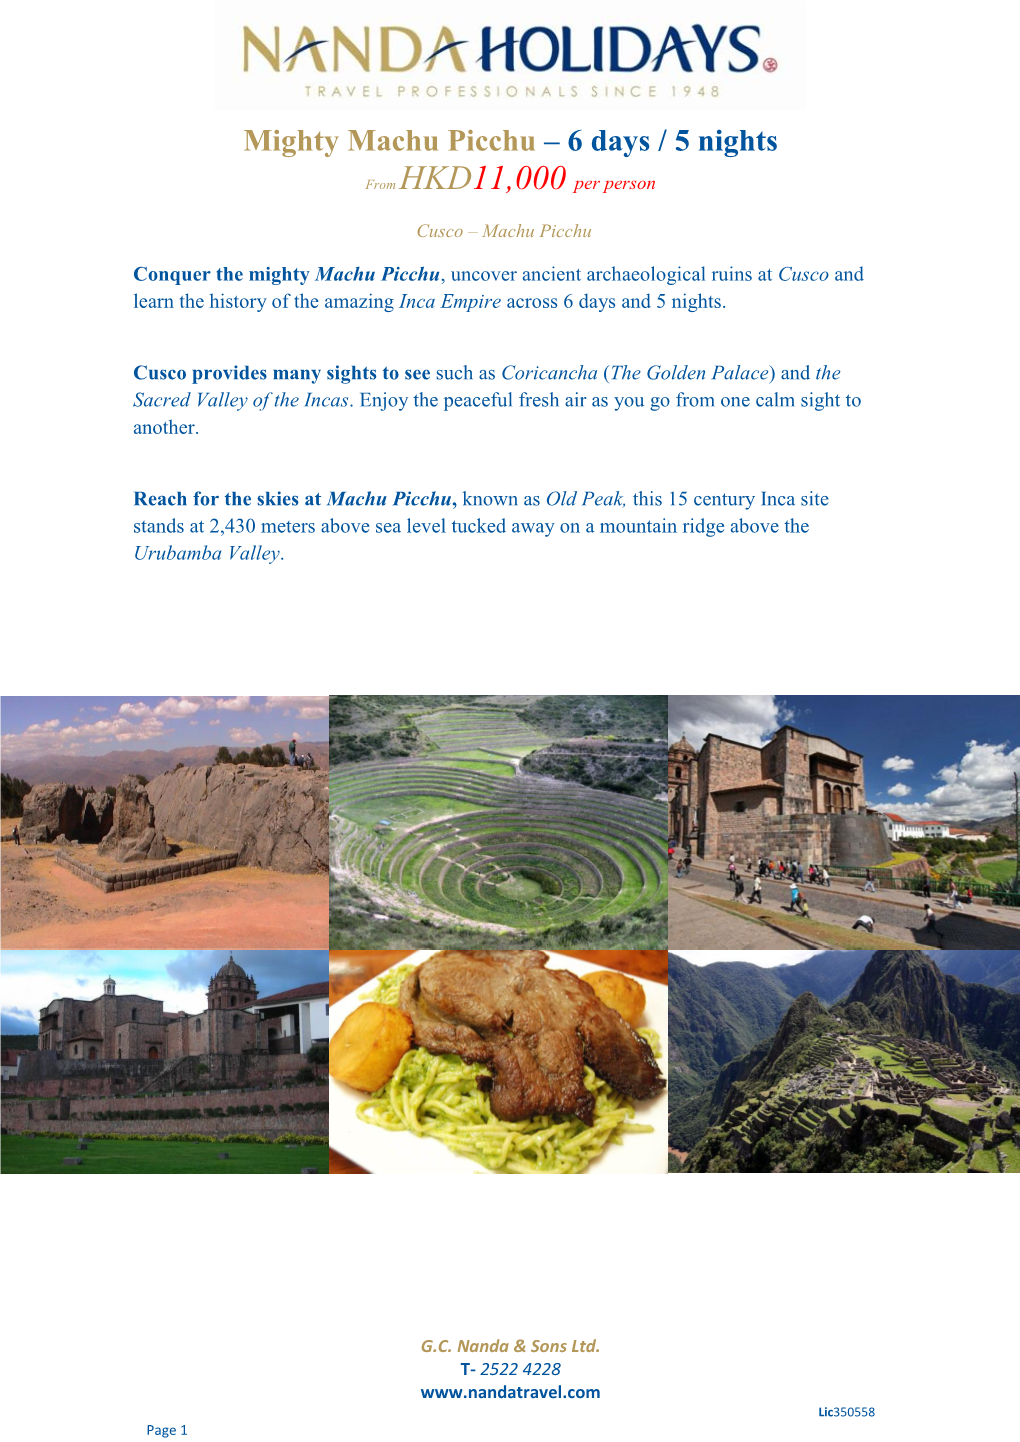 Mighty Machu Picchu – 6 Days / 5 Nights